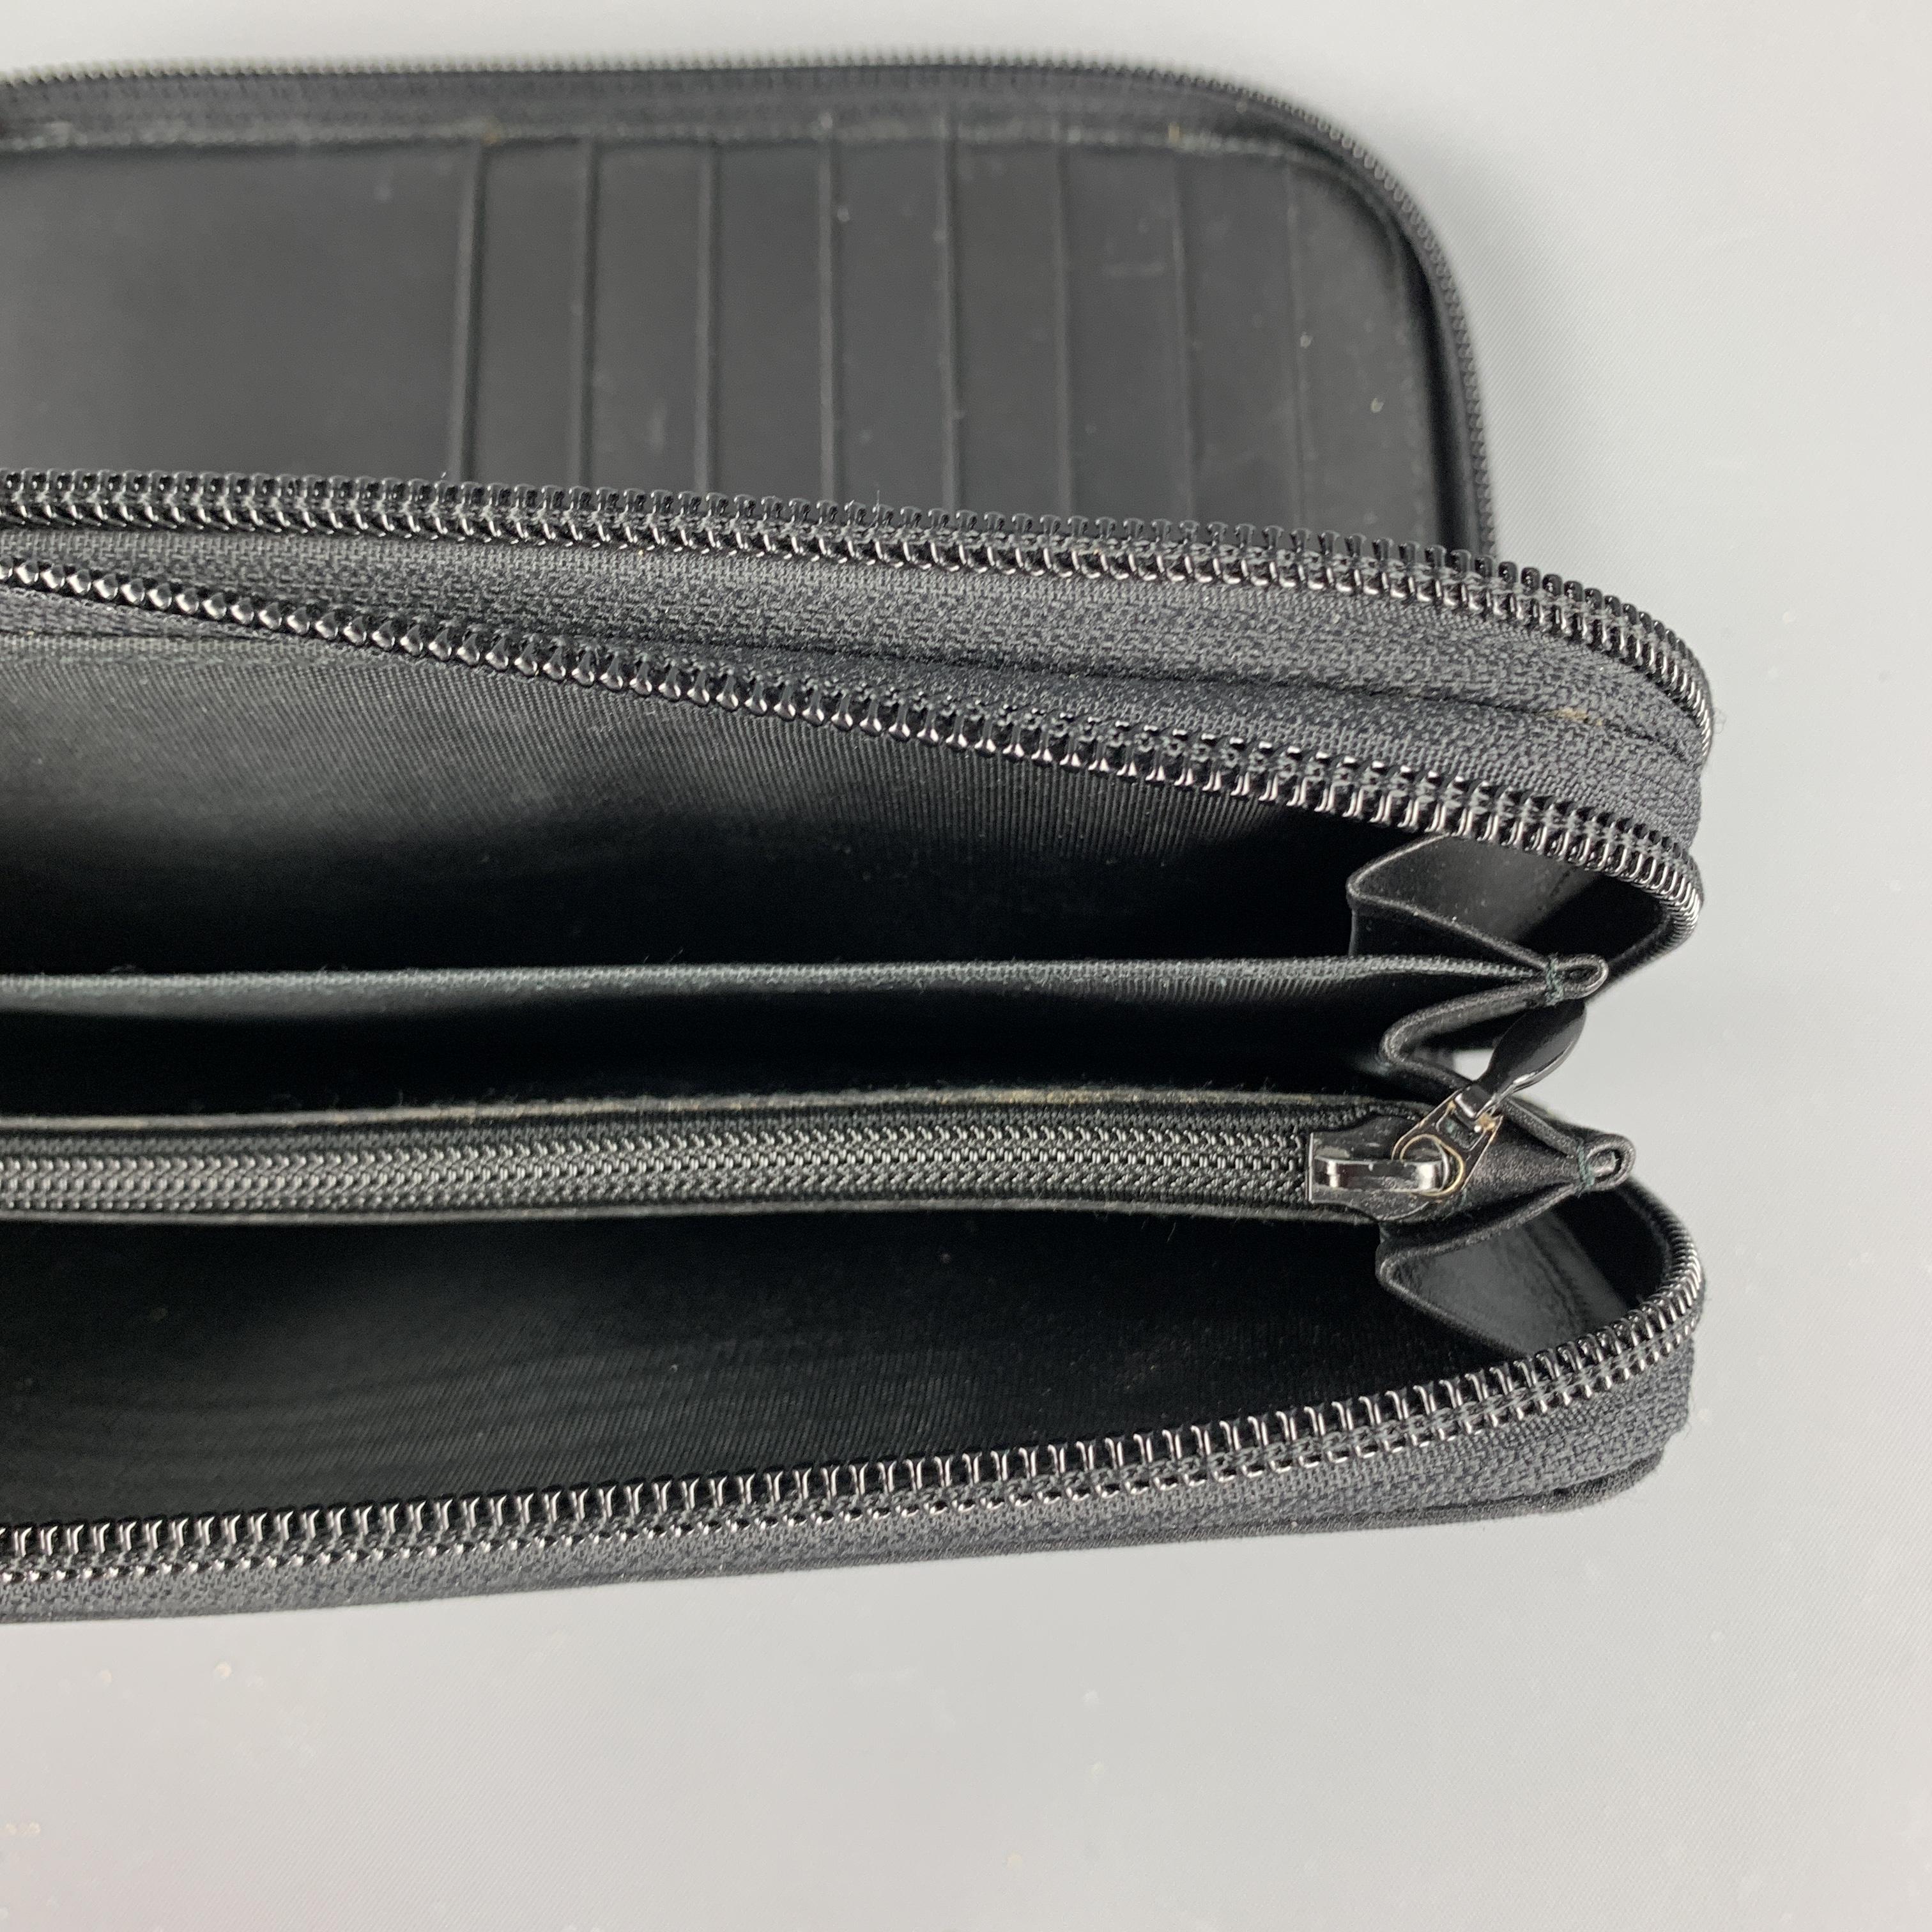 JIL SANDER Black Fabric Leather Wallet / Purse 1